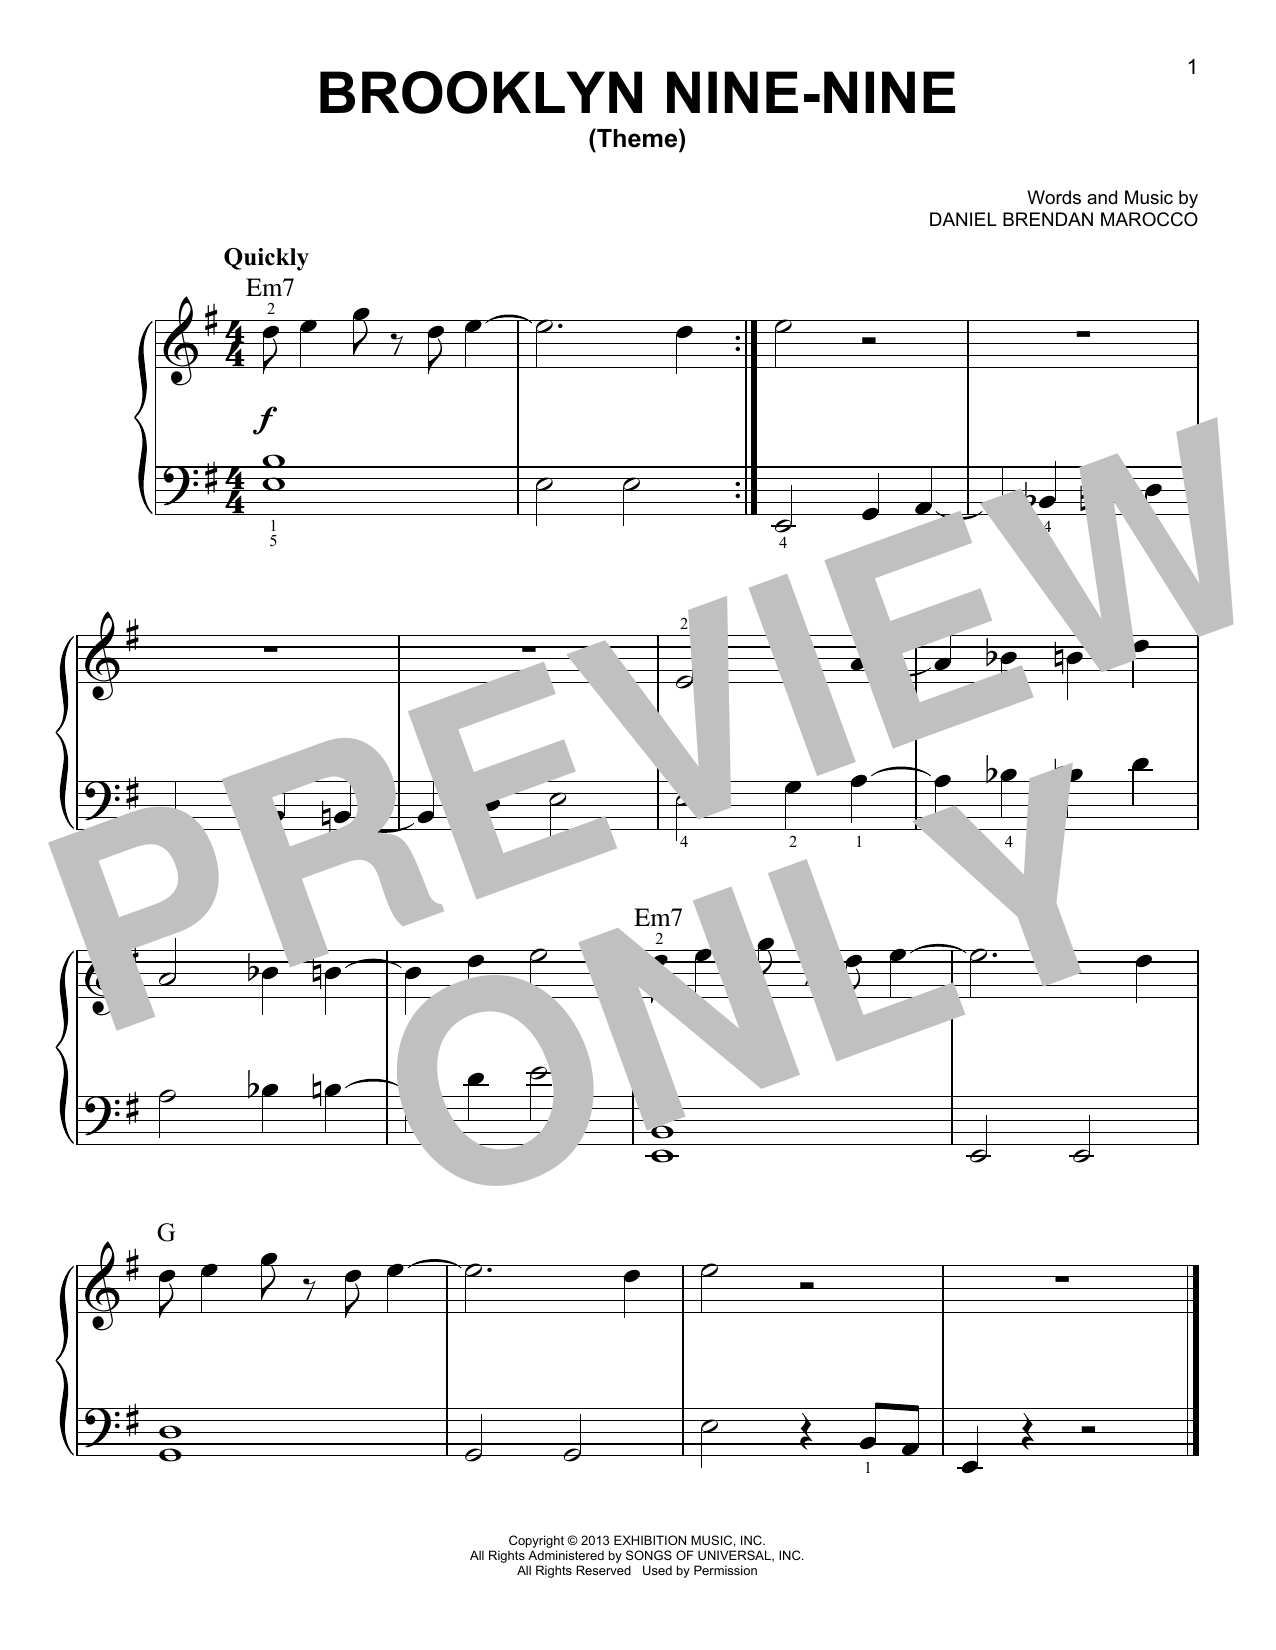 Daniel Brendan Marocco Brooklyn Nine-Nine (Theme) Sheet Music Notes & Chords for Very Easy Piano - Download or Print PDF